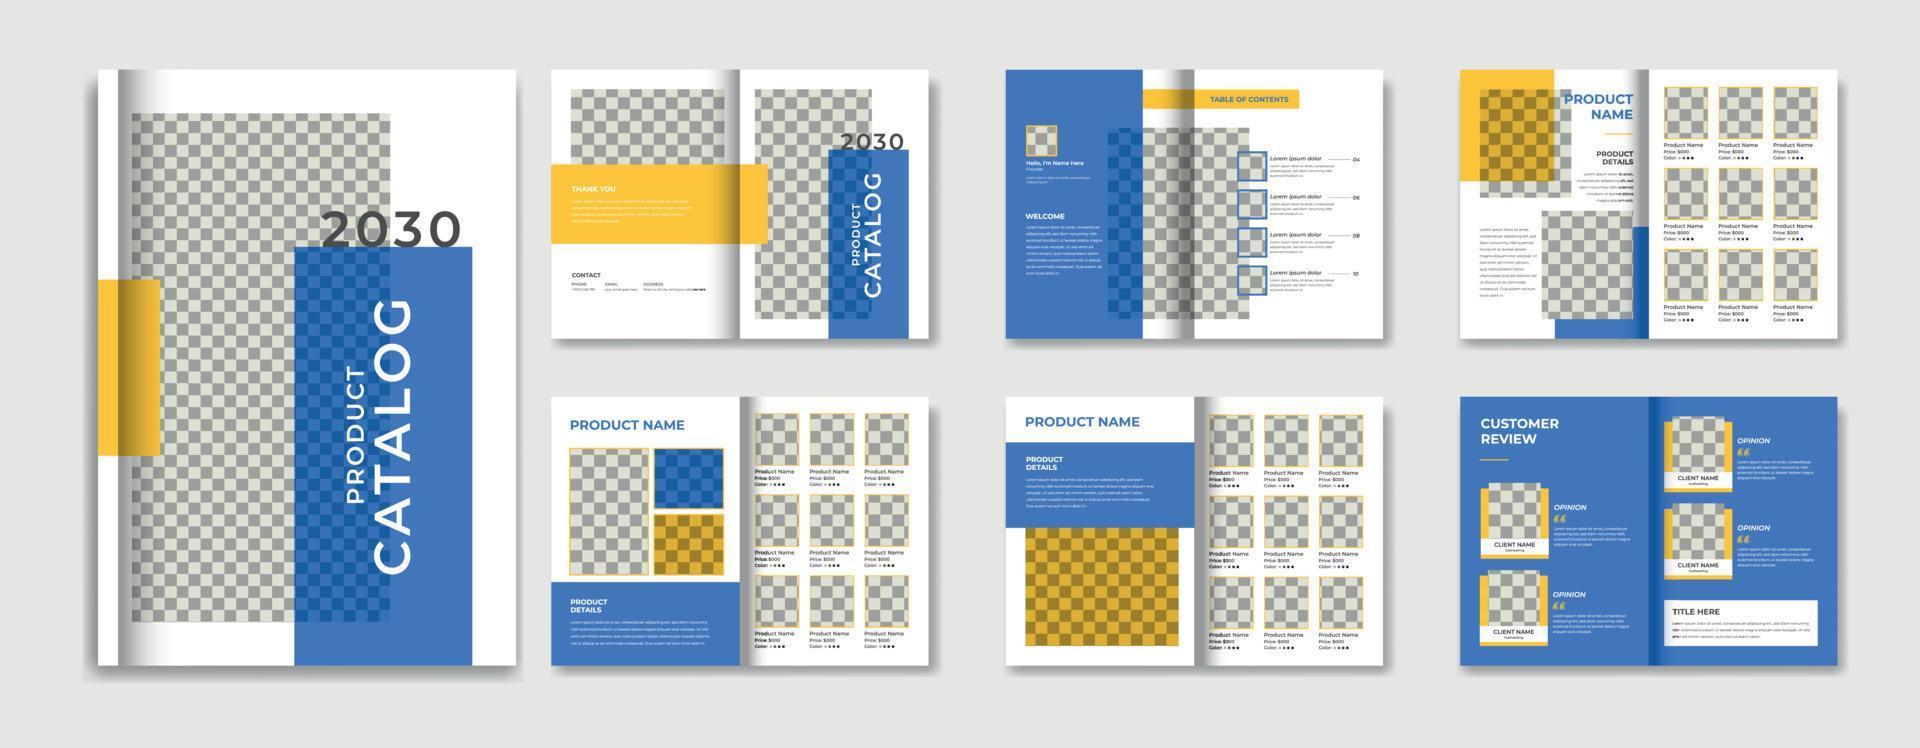 Minimalist product catalog design template, multipurpose product catalogue layout design template, a4 Company product brochure template design vector